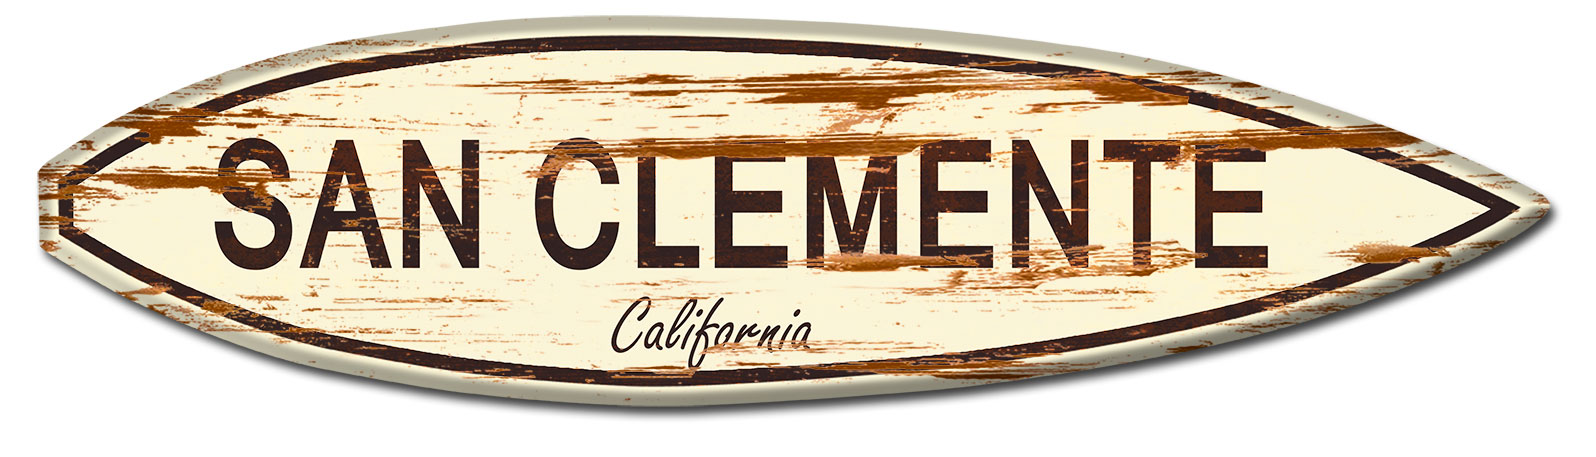 San Clemente Surf Board Wood Print Vintage Sign